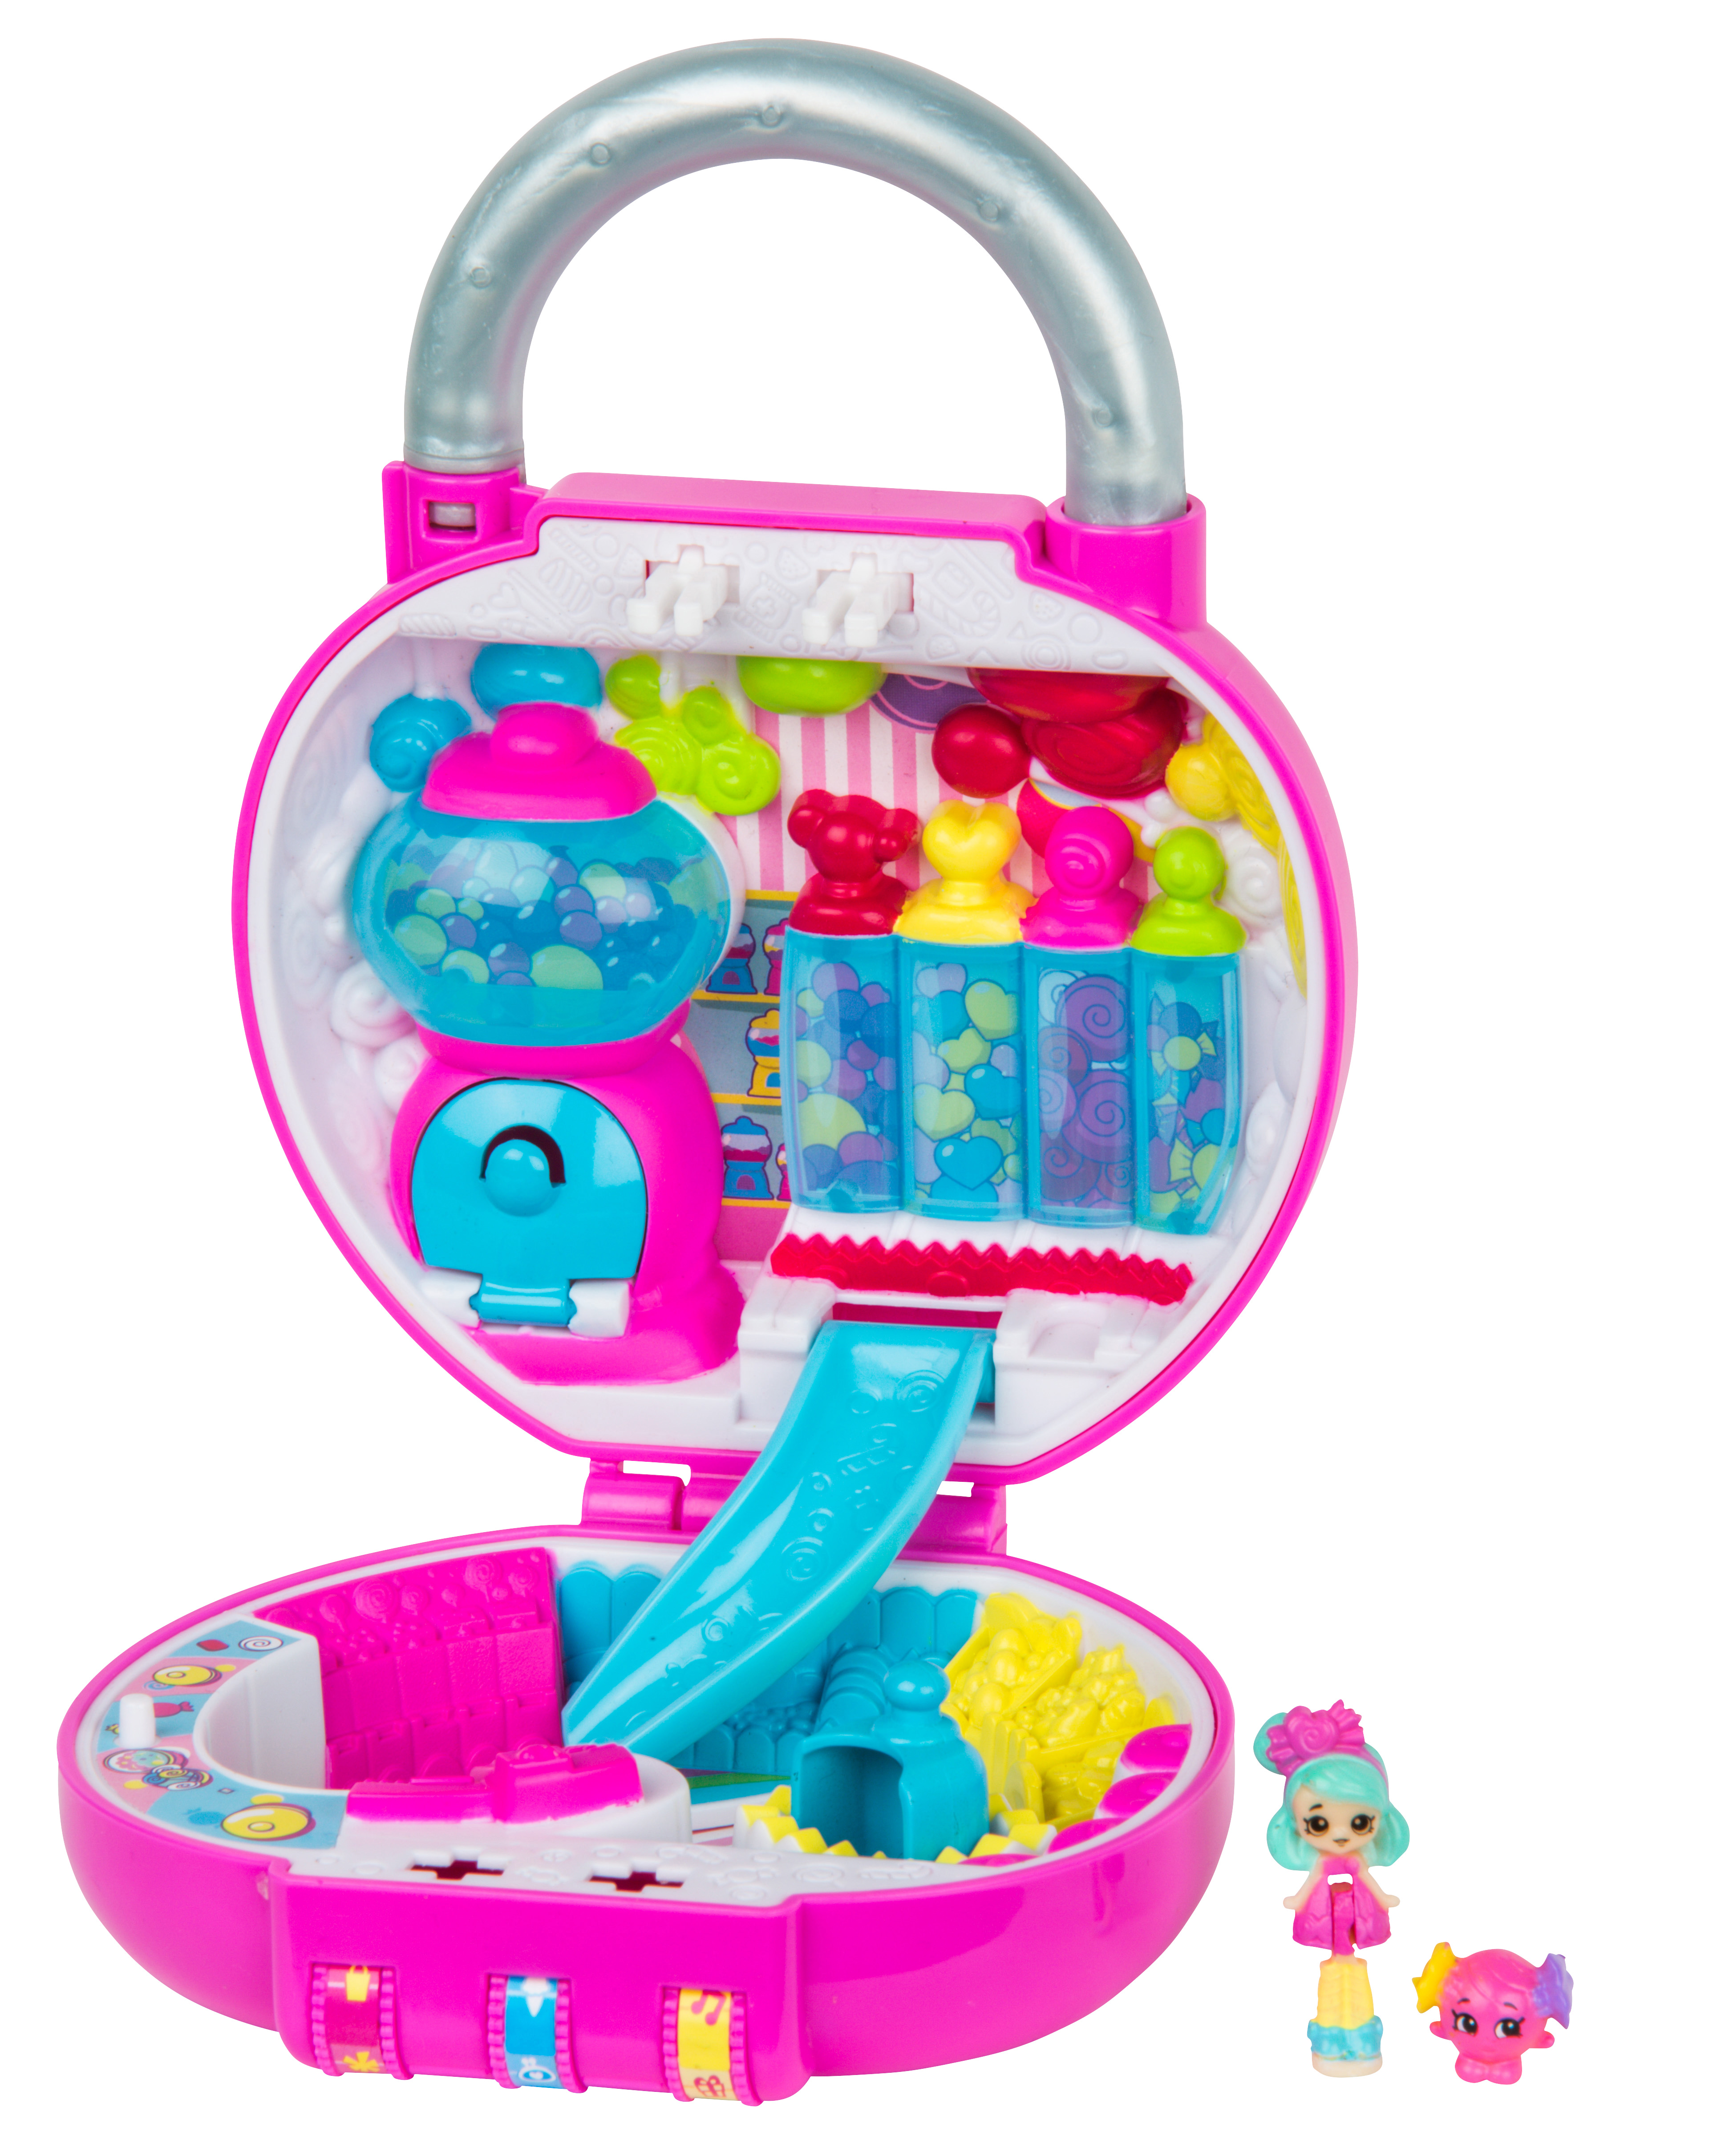 Shopkins Lil' Secrets Secret Lock Playset, so Sweet Candy Shop - image 1 of 11